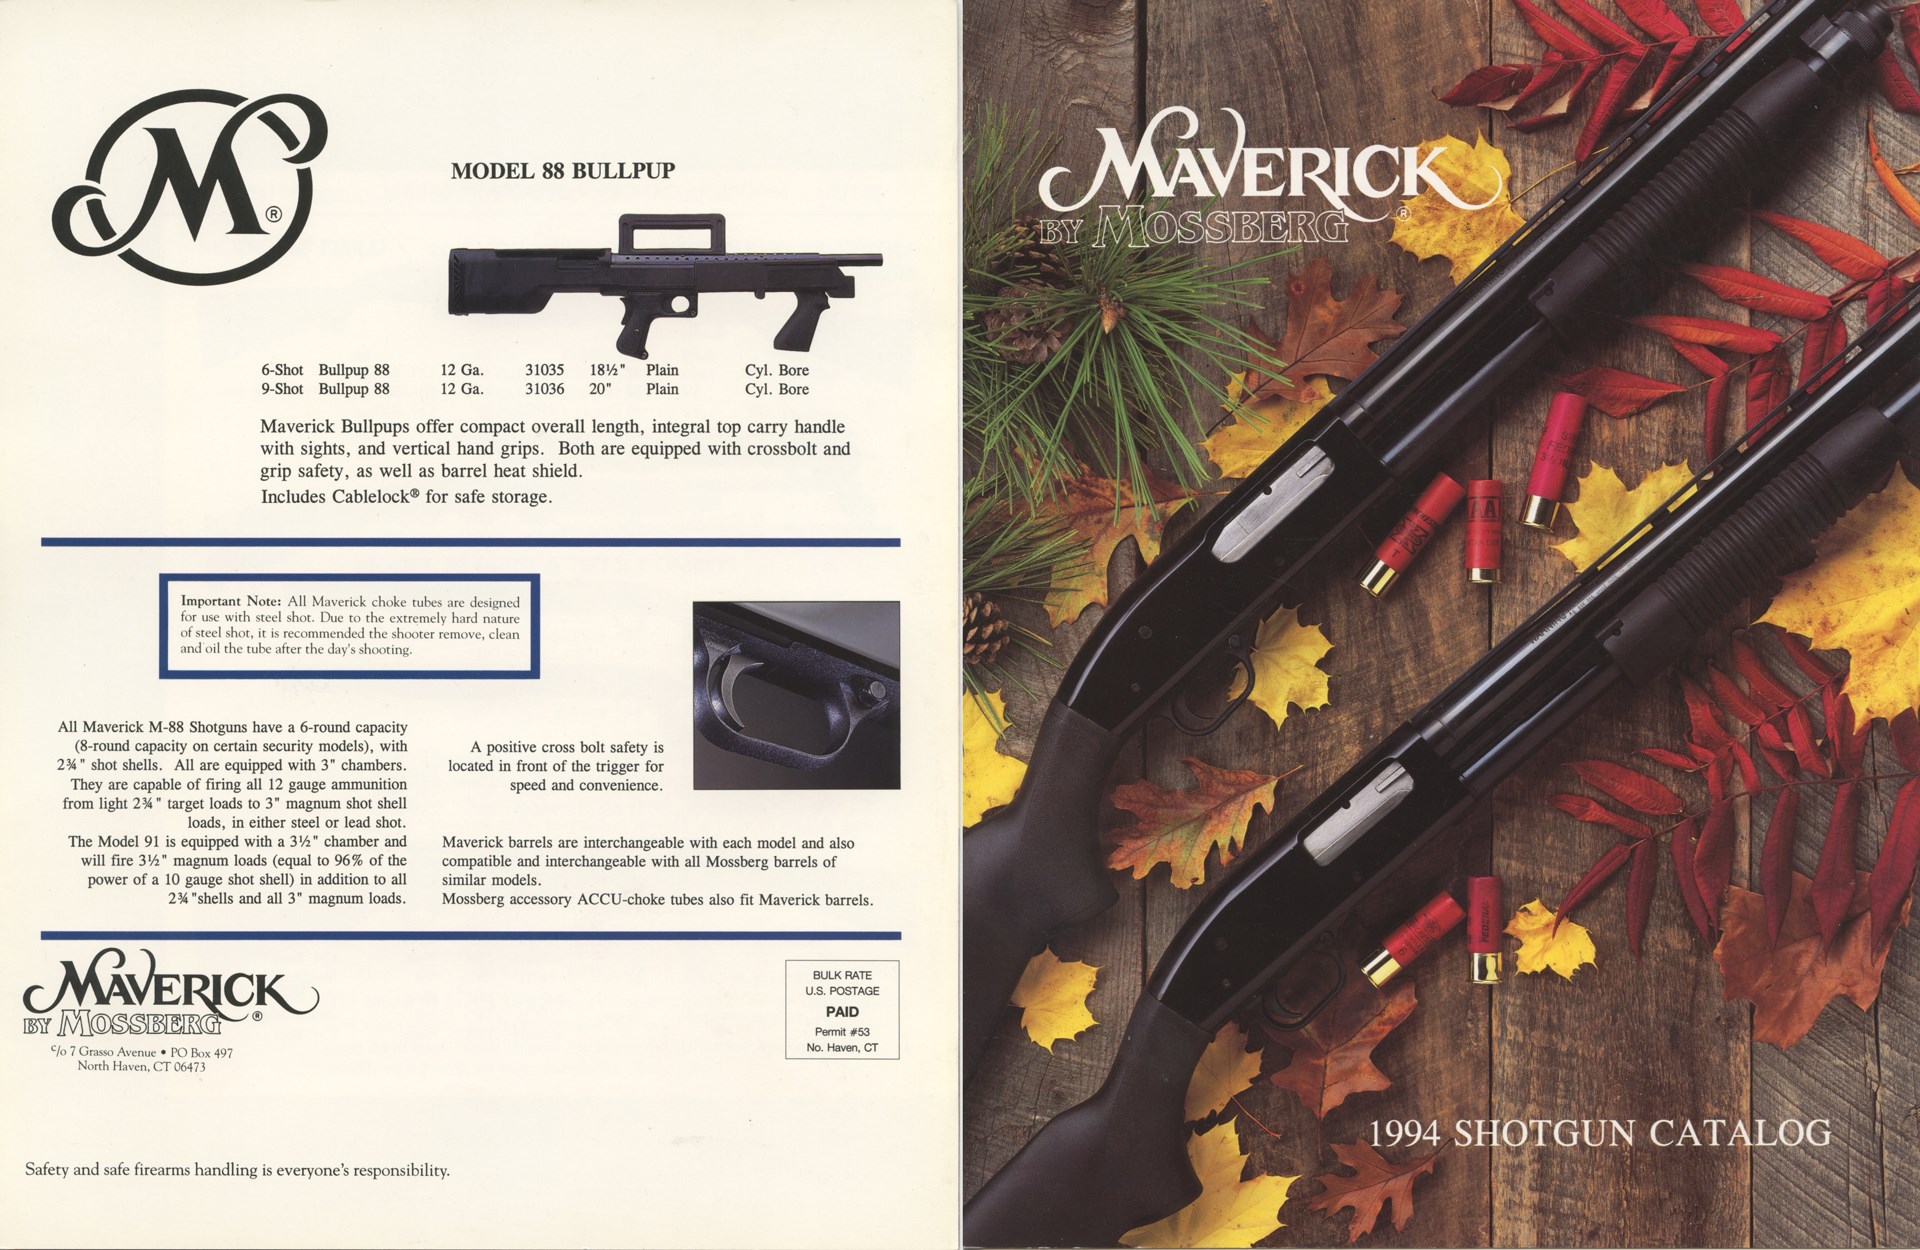 Maverick catalog featuring model 88 bullpup shotgun on back cover